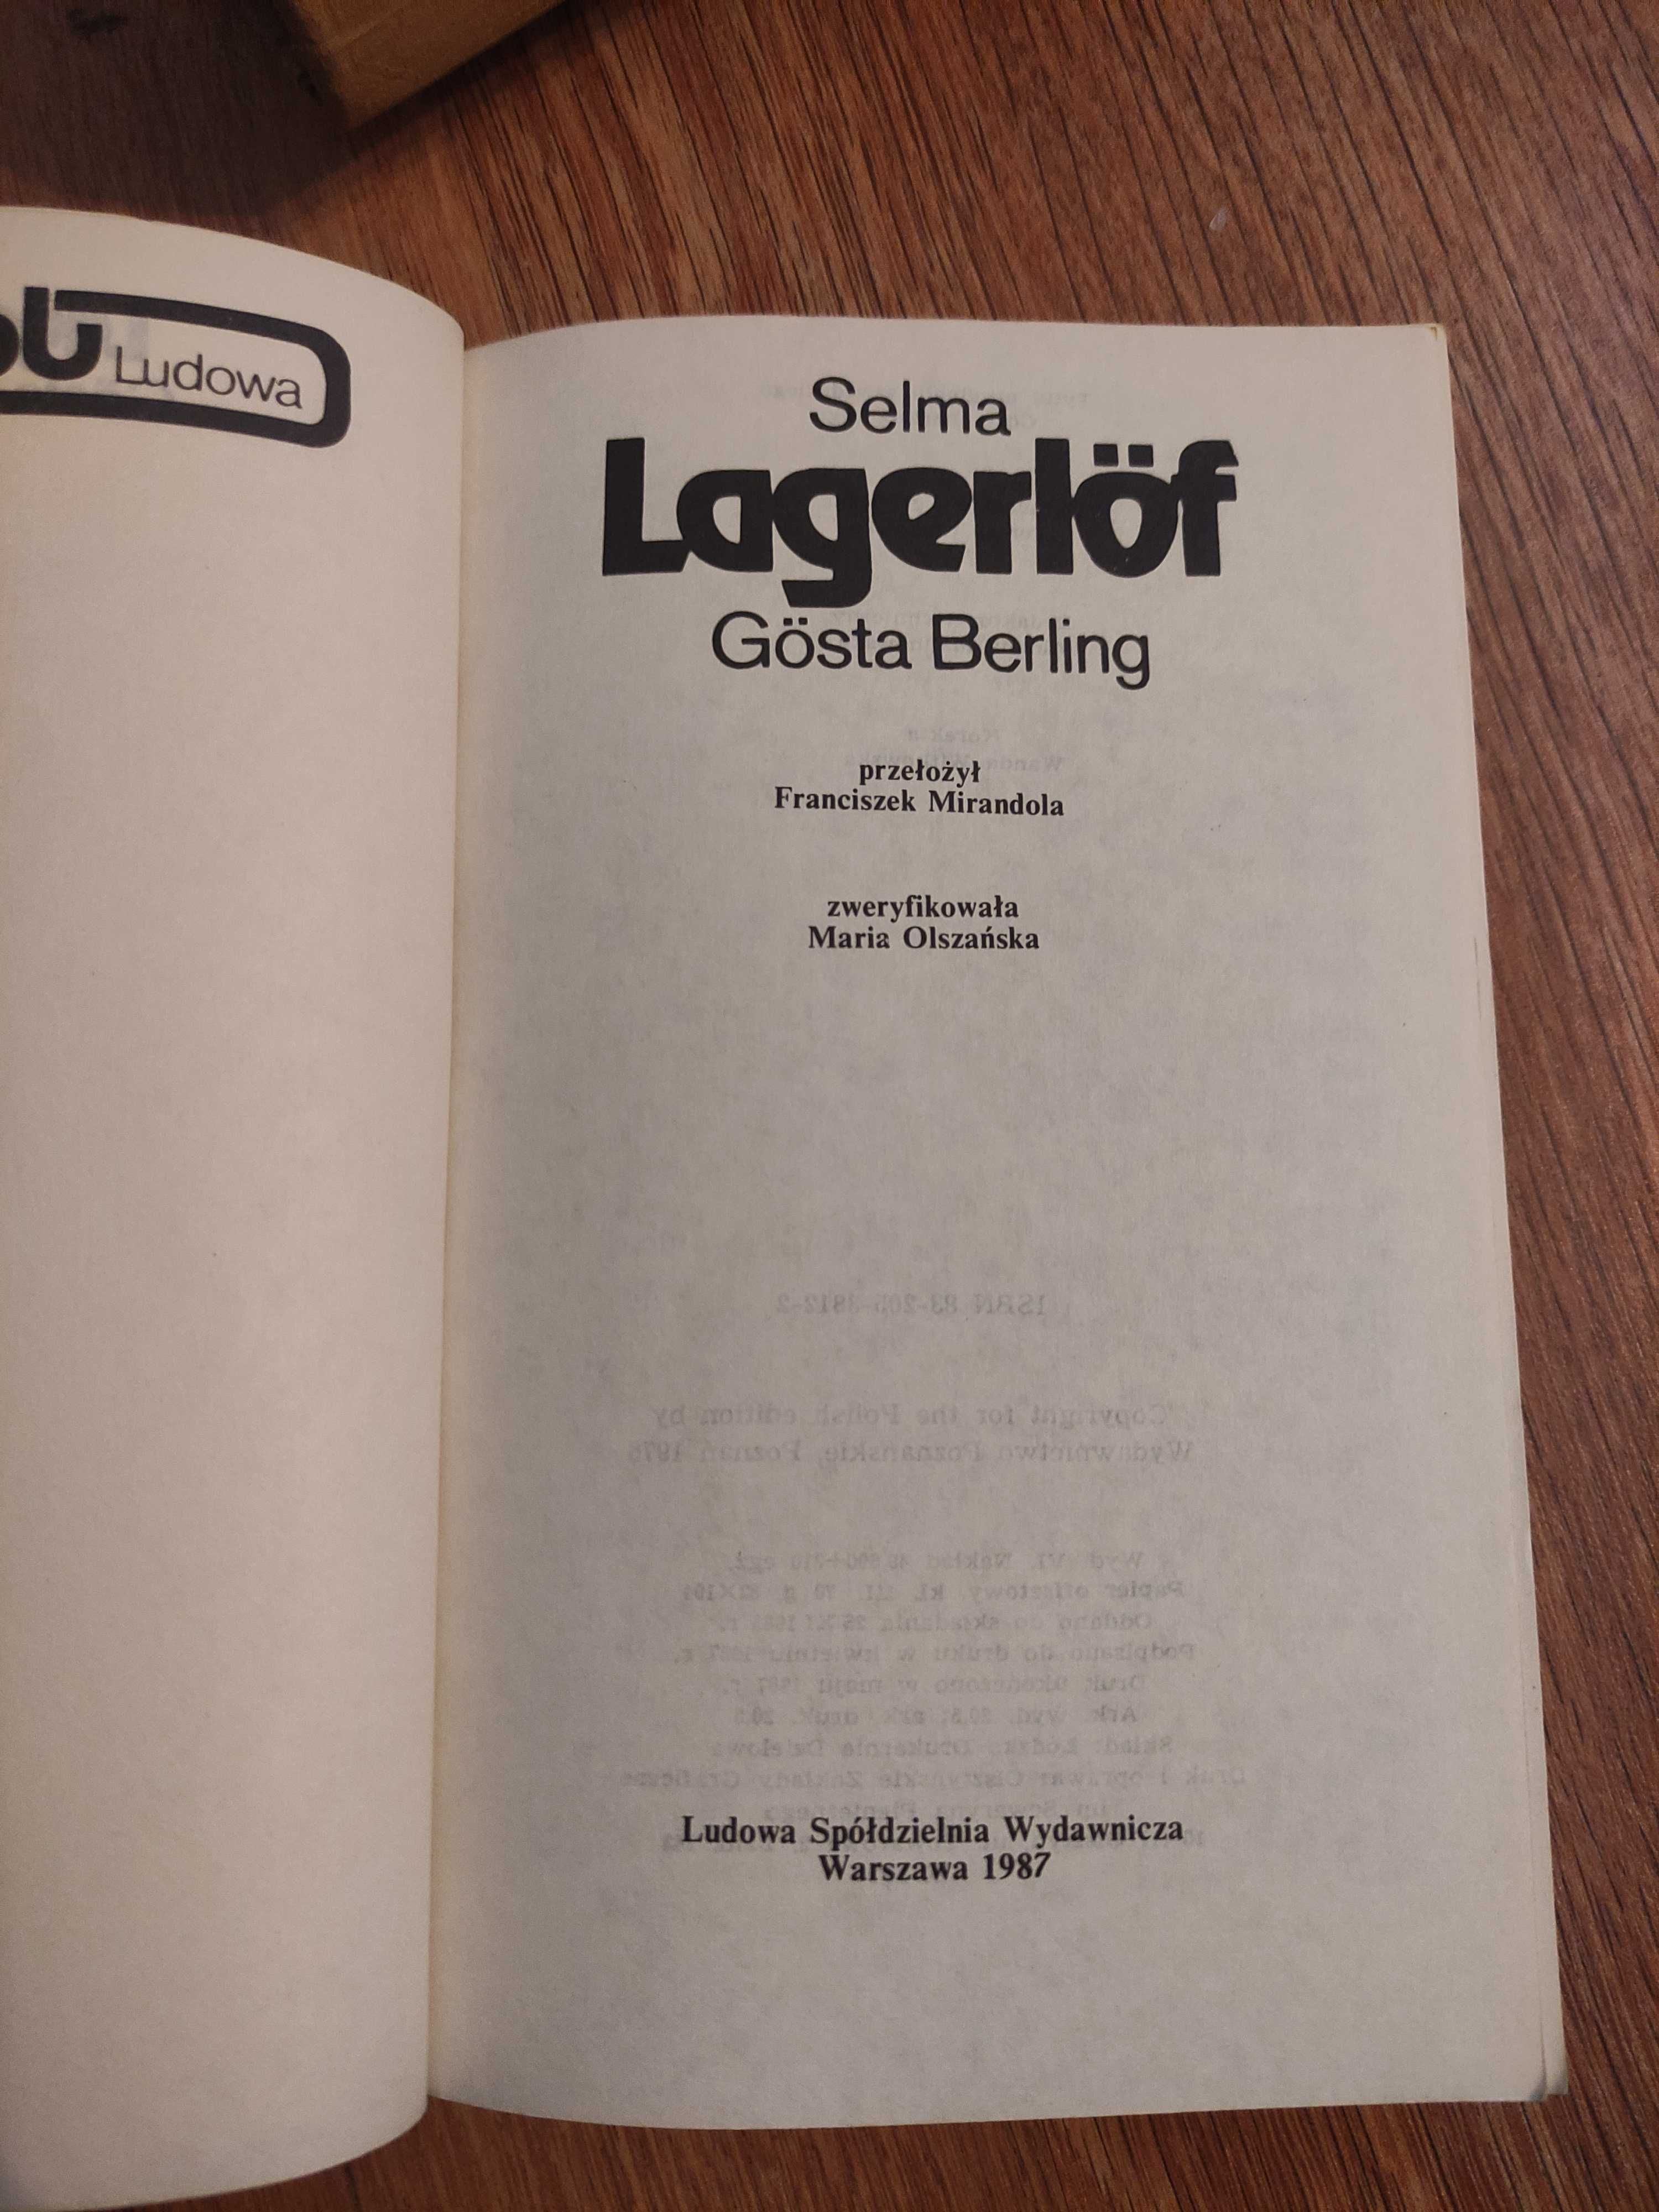 Wełna Lagerlöf Gösta Berling